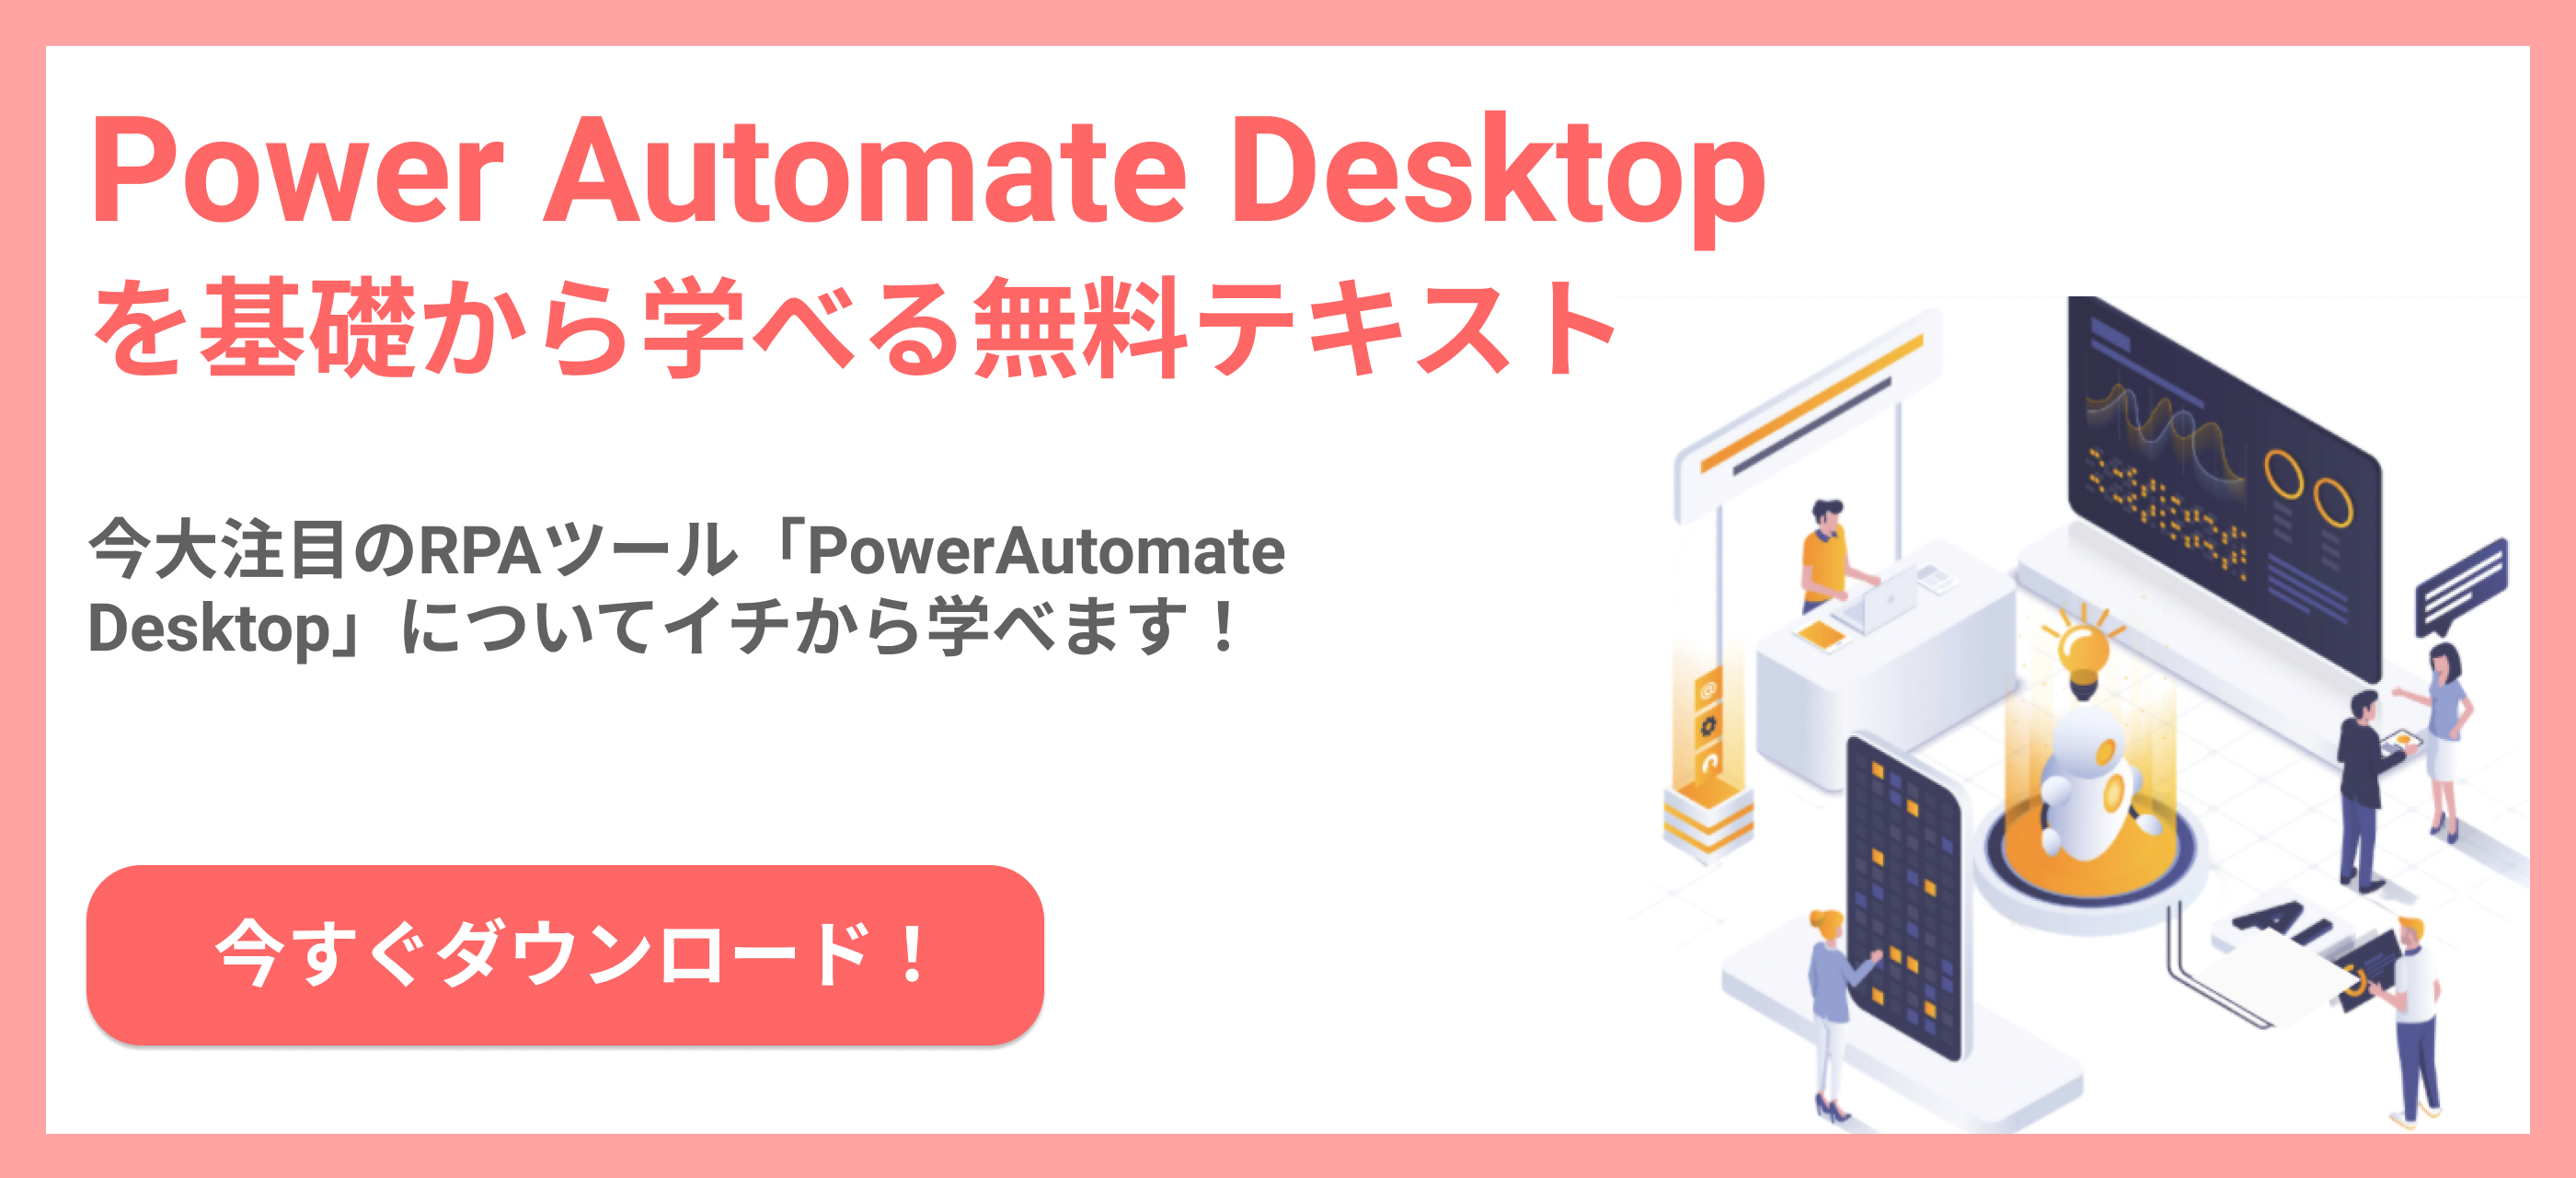 Power Automate Desktop_資料DLバナー